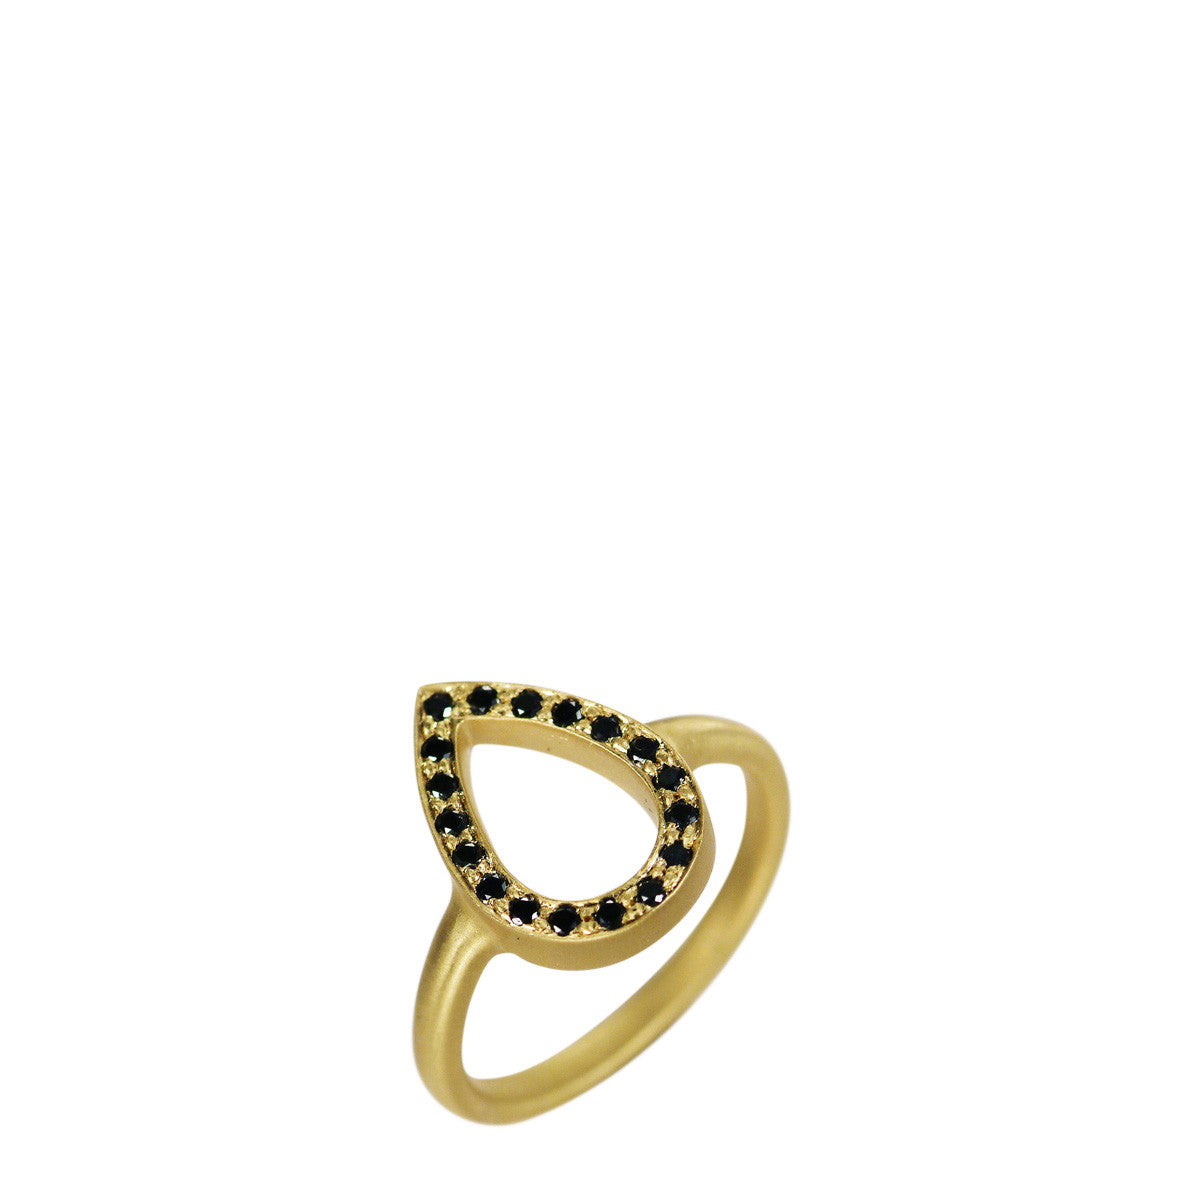 18K Gold Pave Teardrop Ring with Black Diamonds